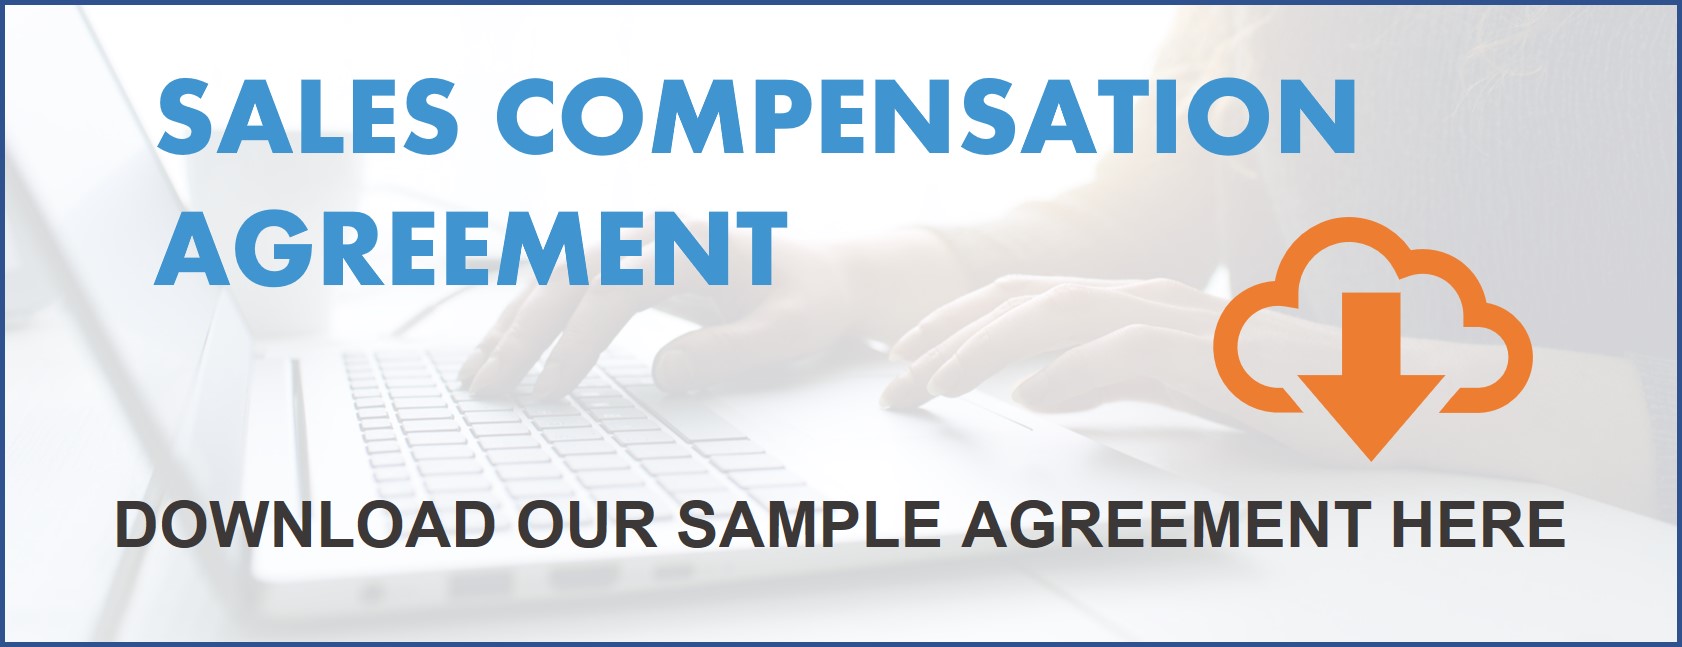 Sales-Compensation-Agreement-Download-1